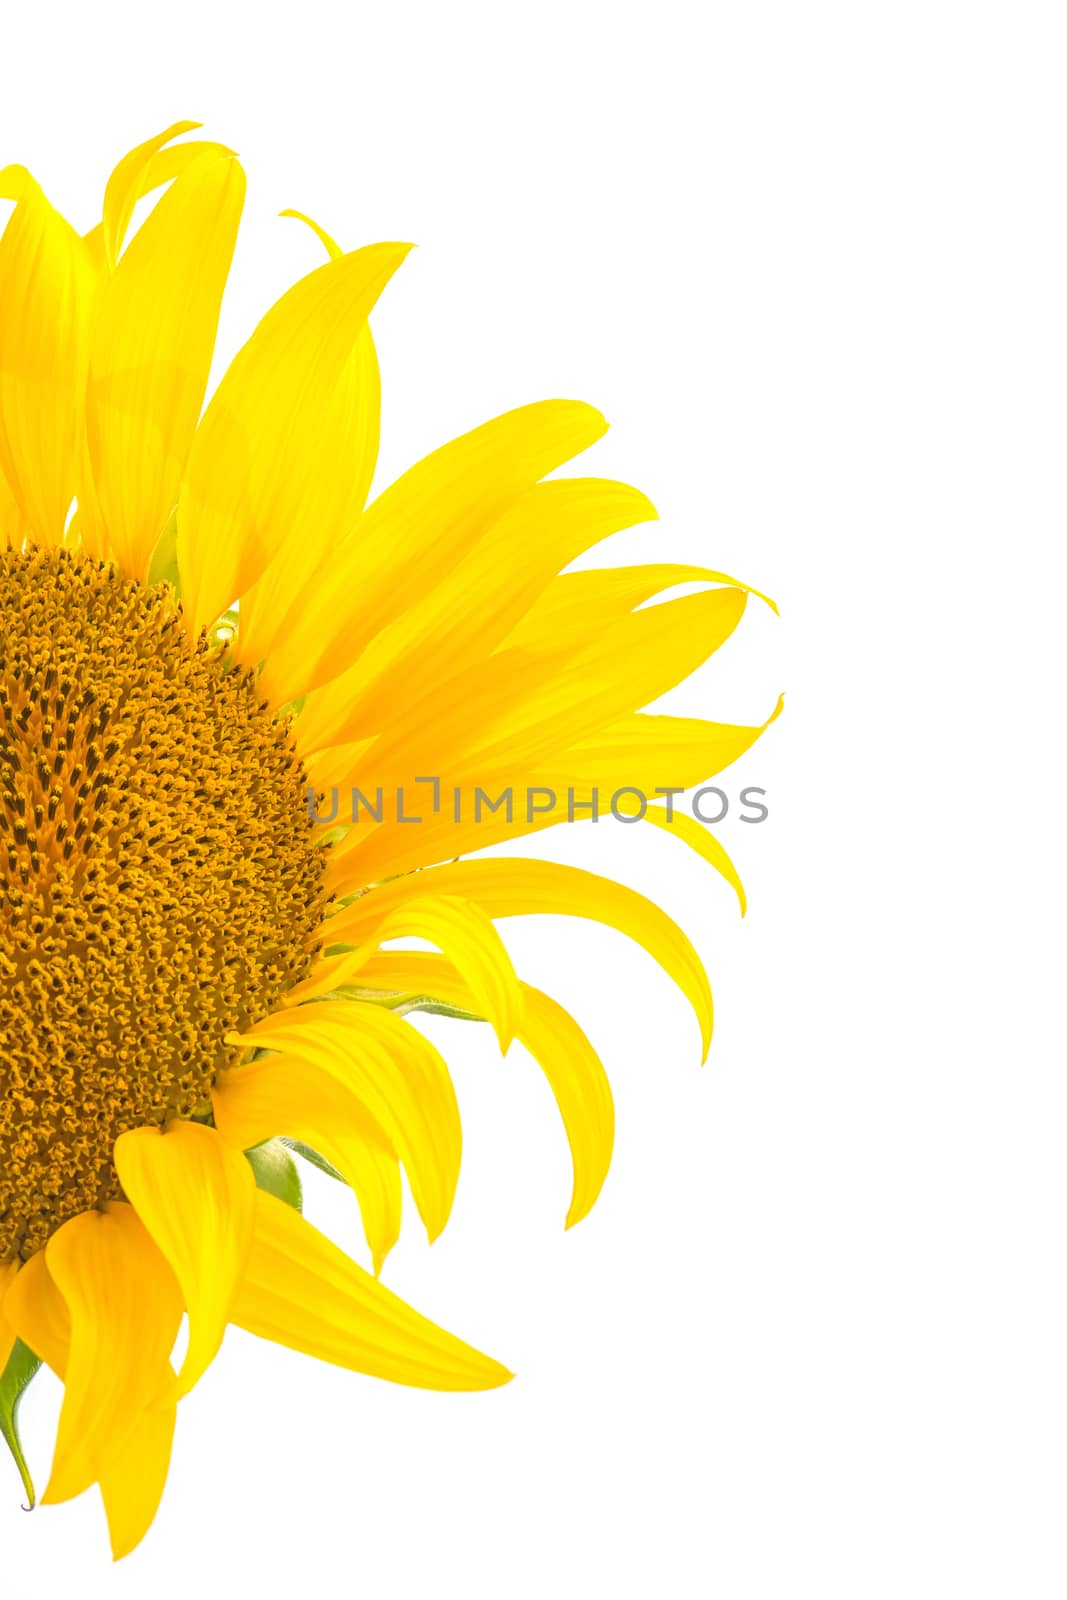 Beautiful yellow flower, sunflower, isolated on white background